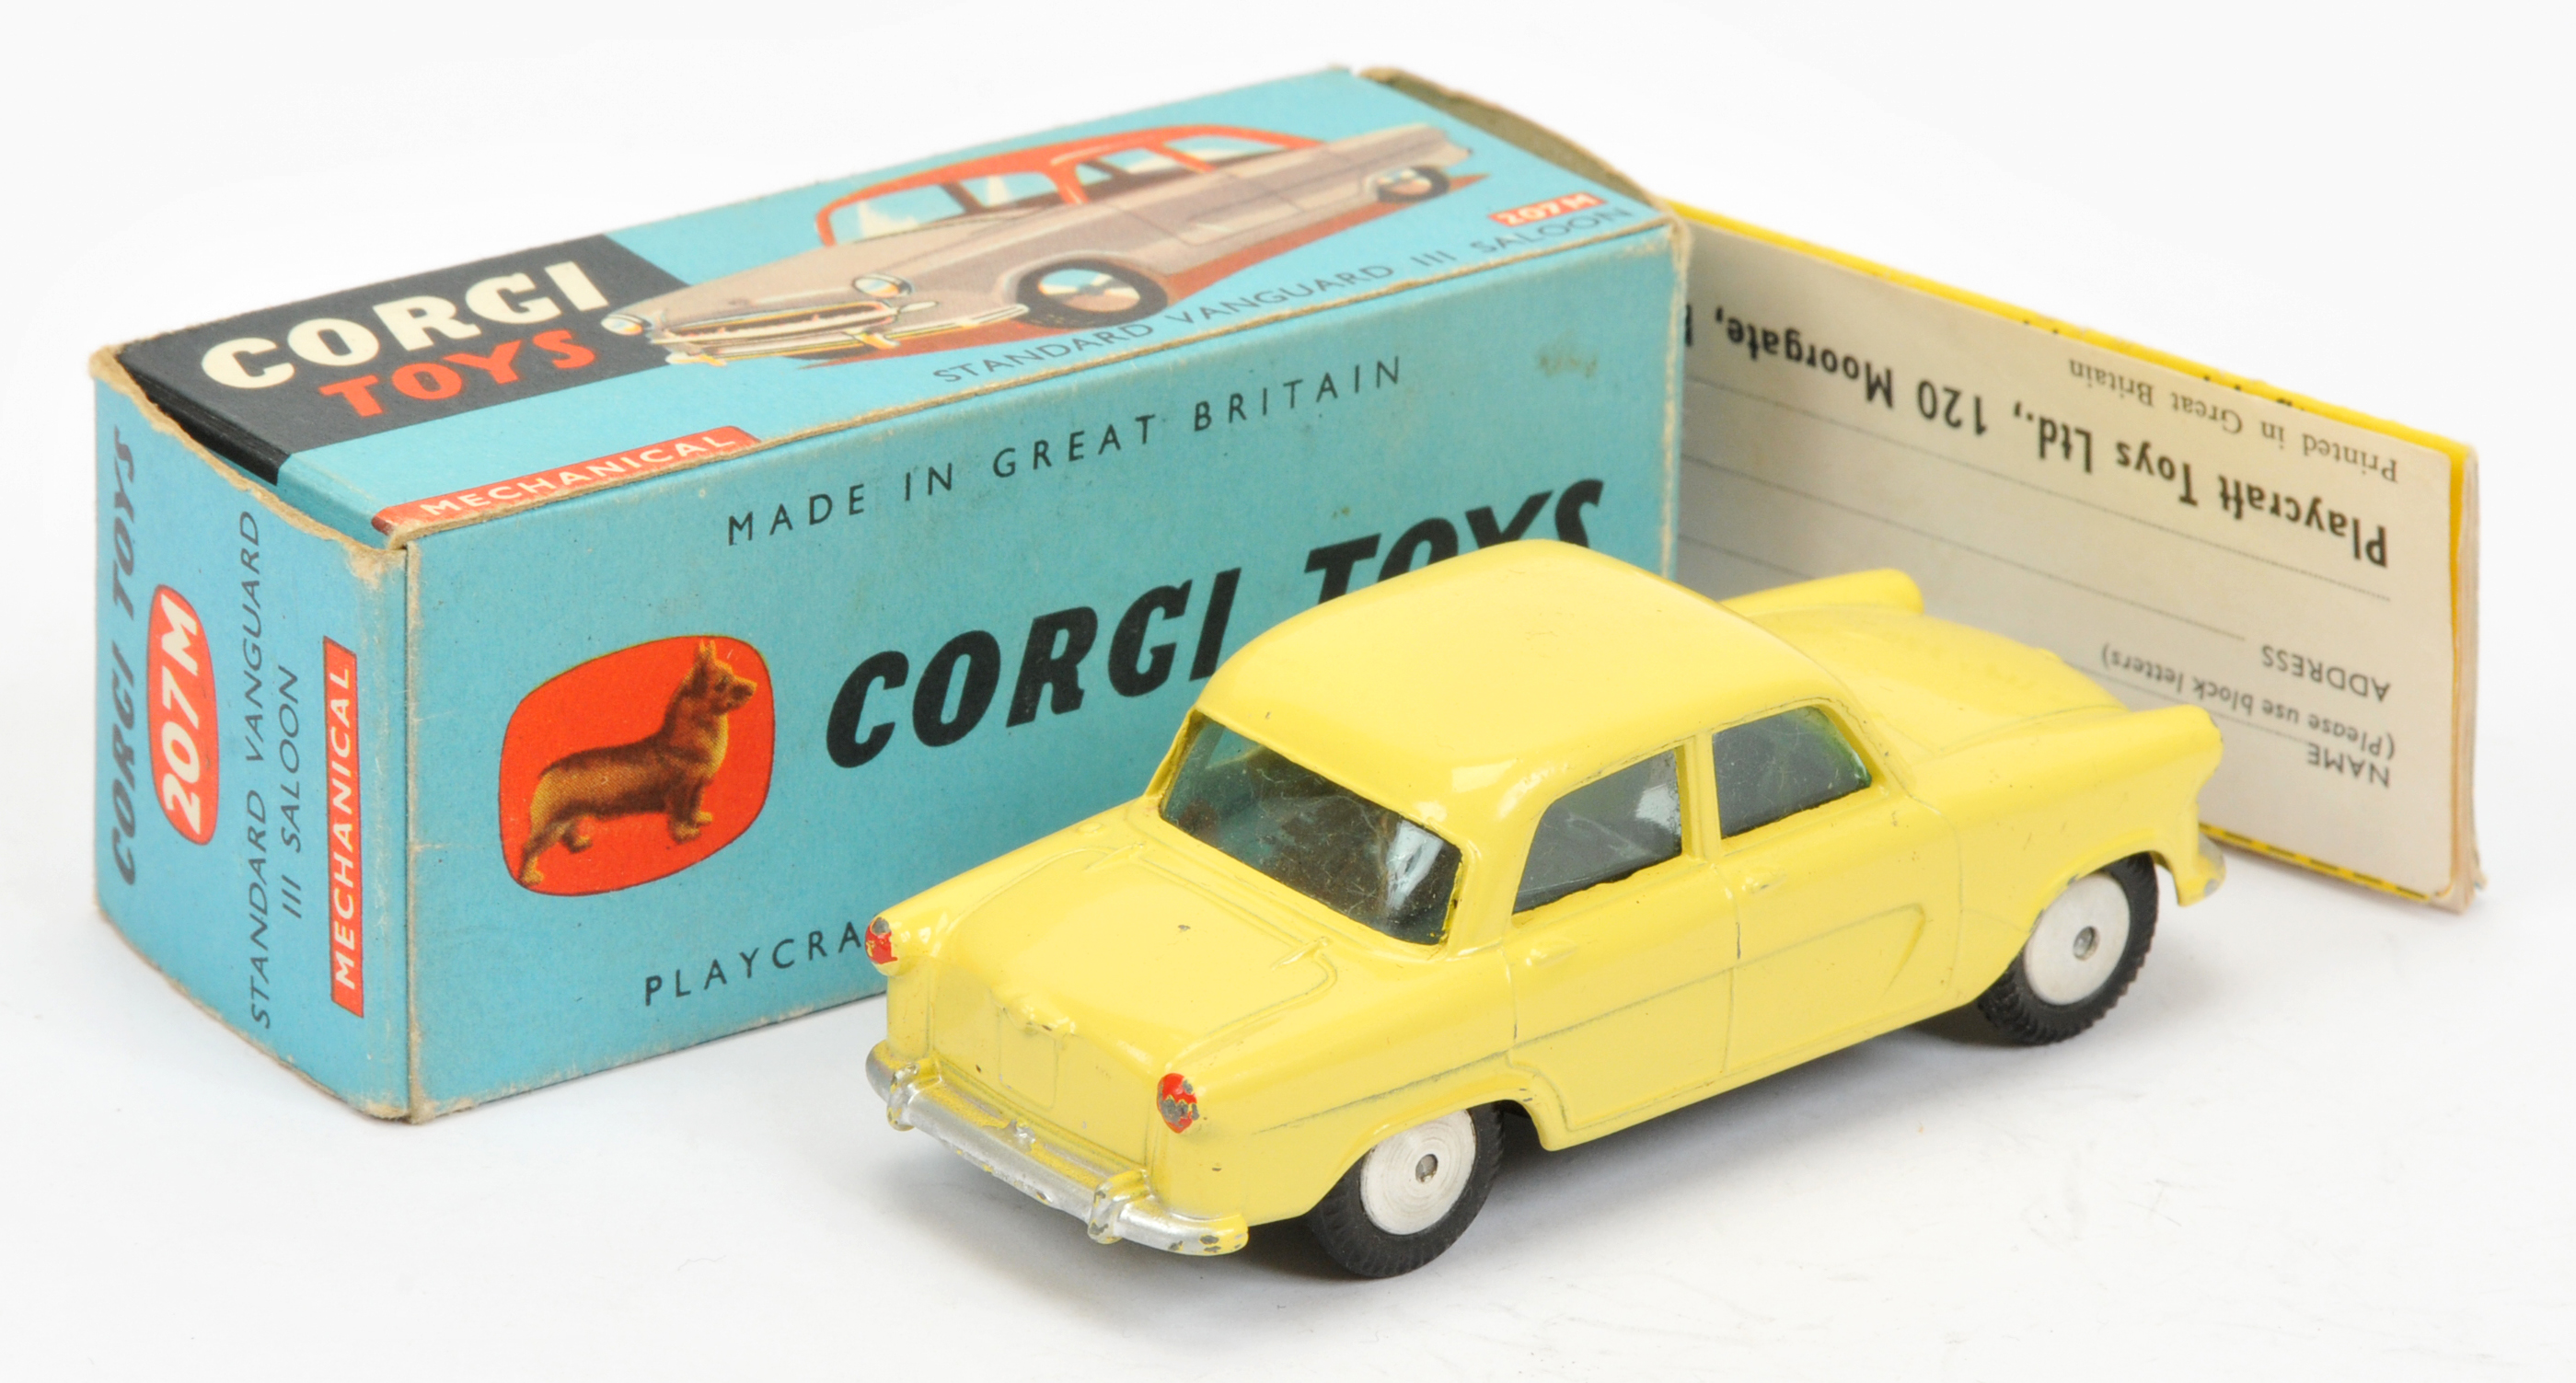 Corgi Toys 207M Standard vanguard saloon  - yellow body, mechanical motor, silver trim - Image 2 of 2